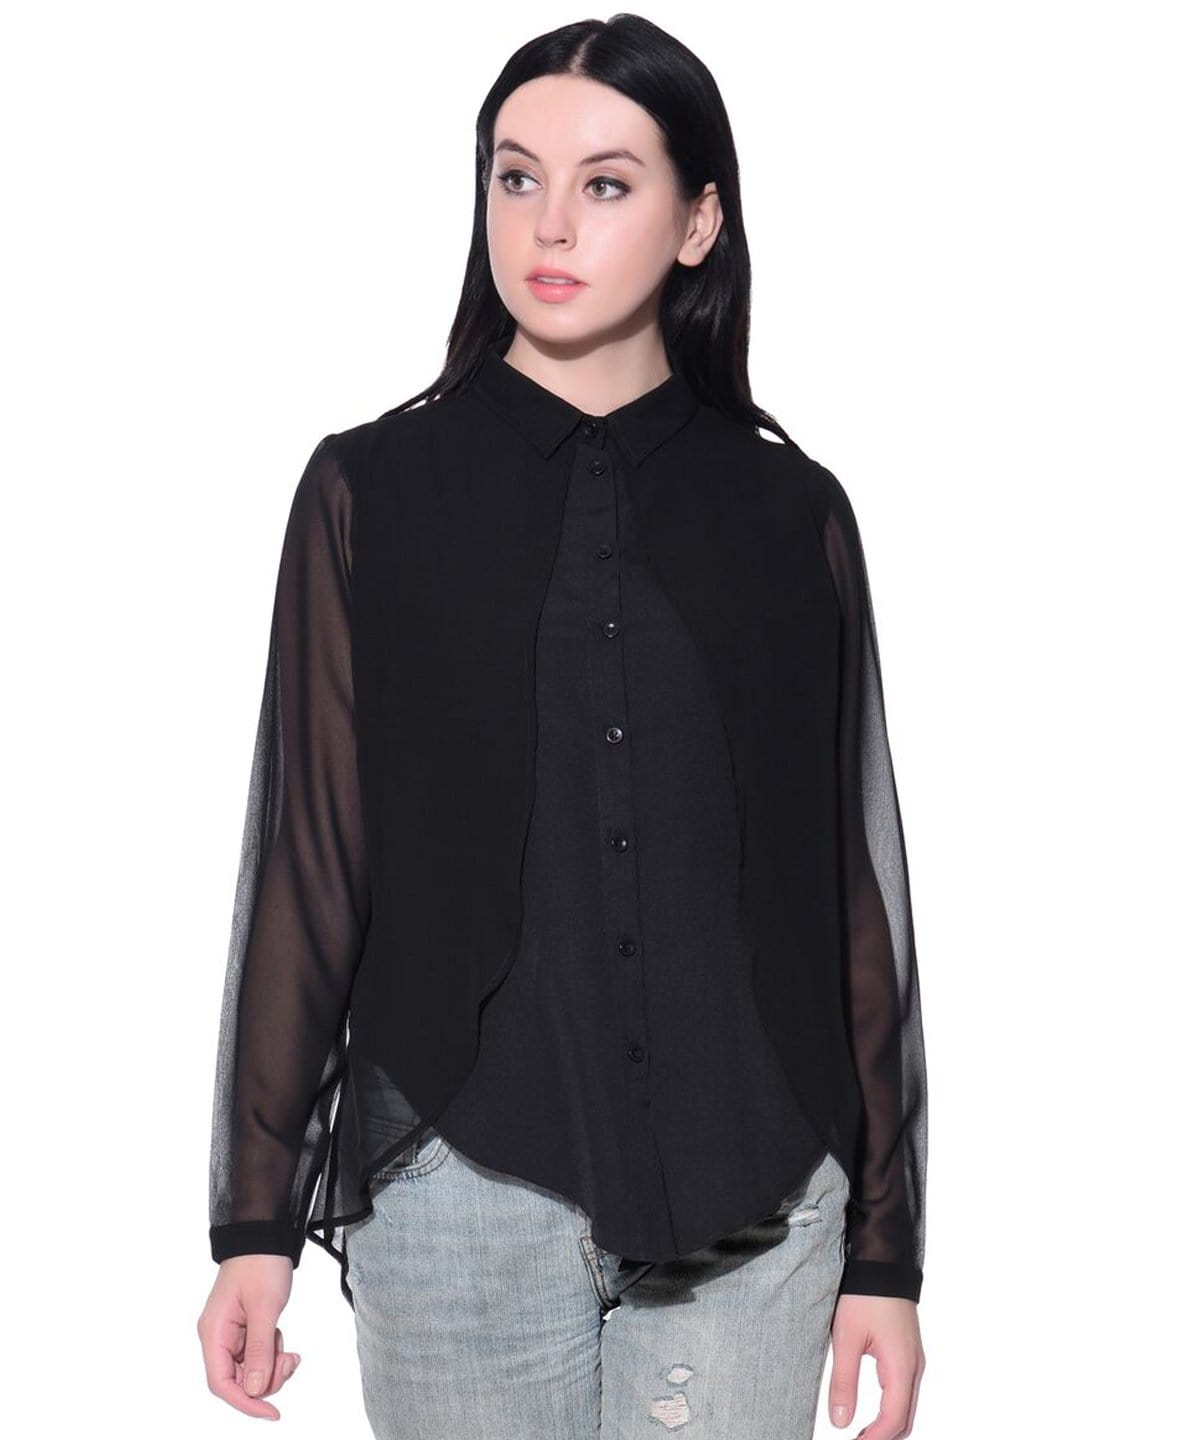 Solid Black Ruffle Georgette Overlay Shirt - Uptownie